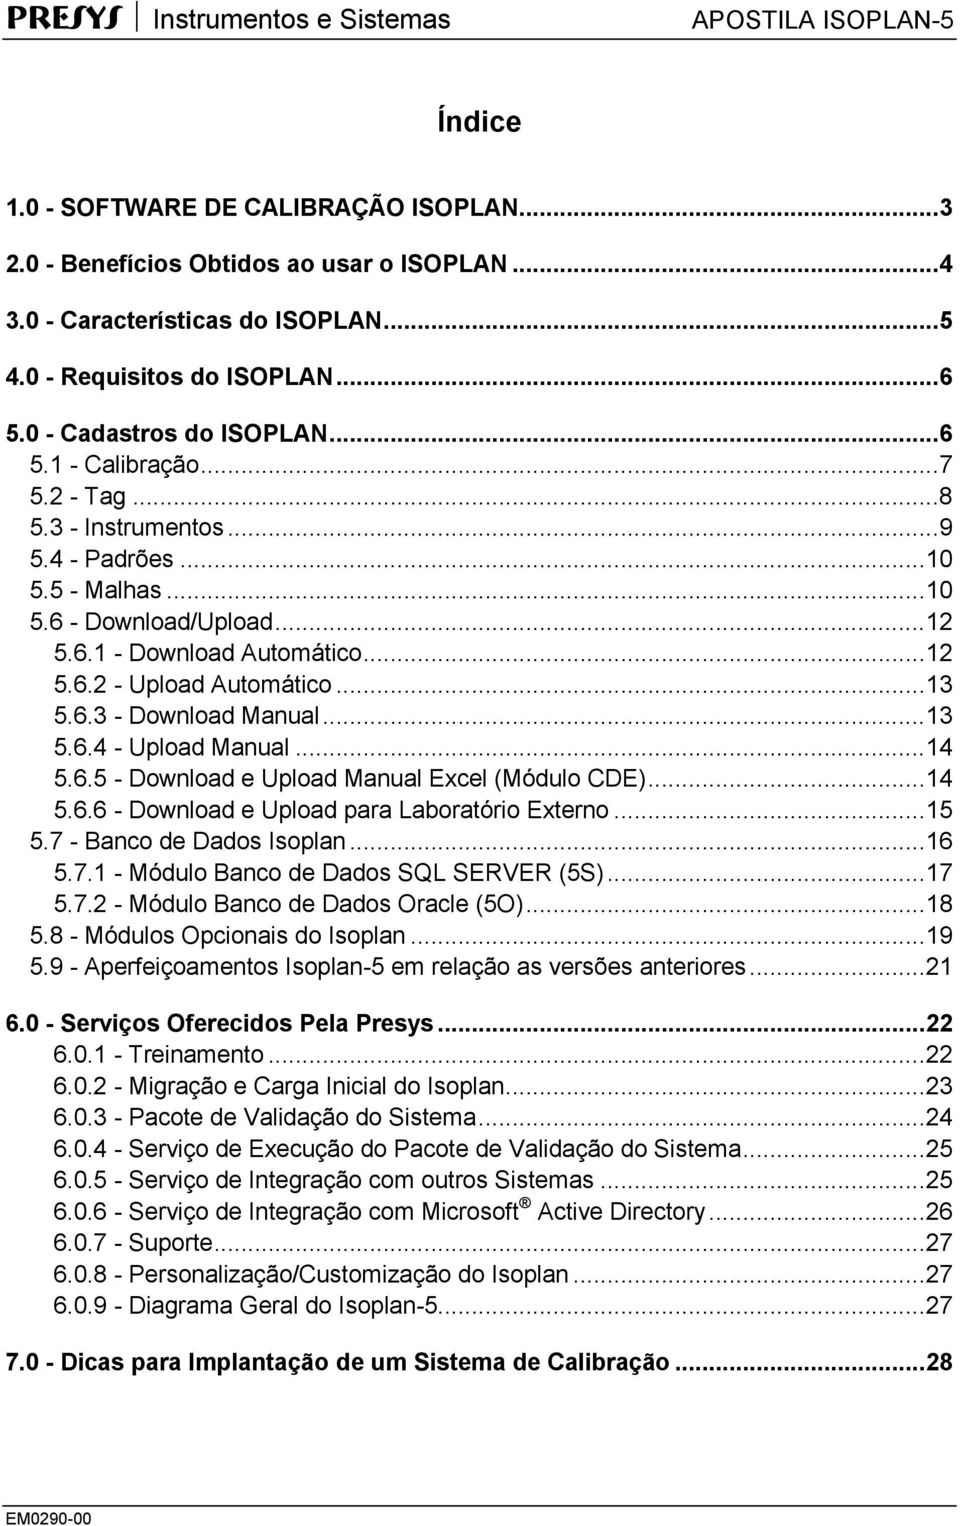 .. 13 5.6.4 - Upload Manual... 14 5.6.5 - Download e Upload Manual Excel (Módulo CDE)... 14 5.6.6 - Download e Upload para Laboratório Externo... 15 5.7 - Banco de Dados Isoplan... 16 5.7.1 - Módulo Banco de Dados SQL SERVER (5S).